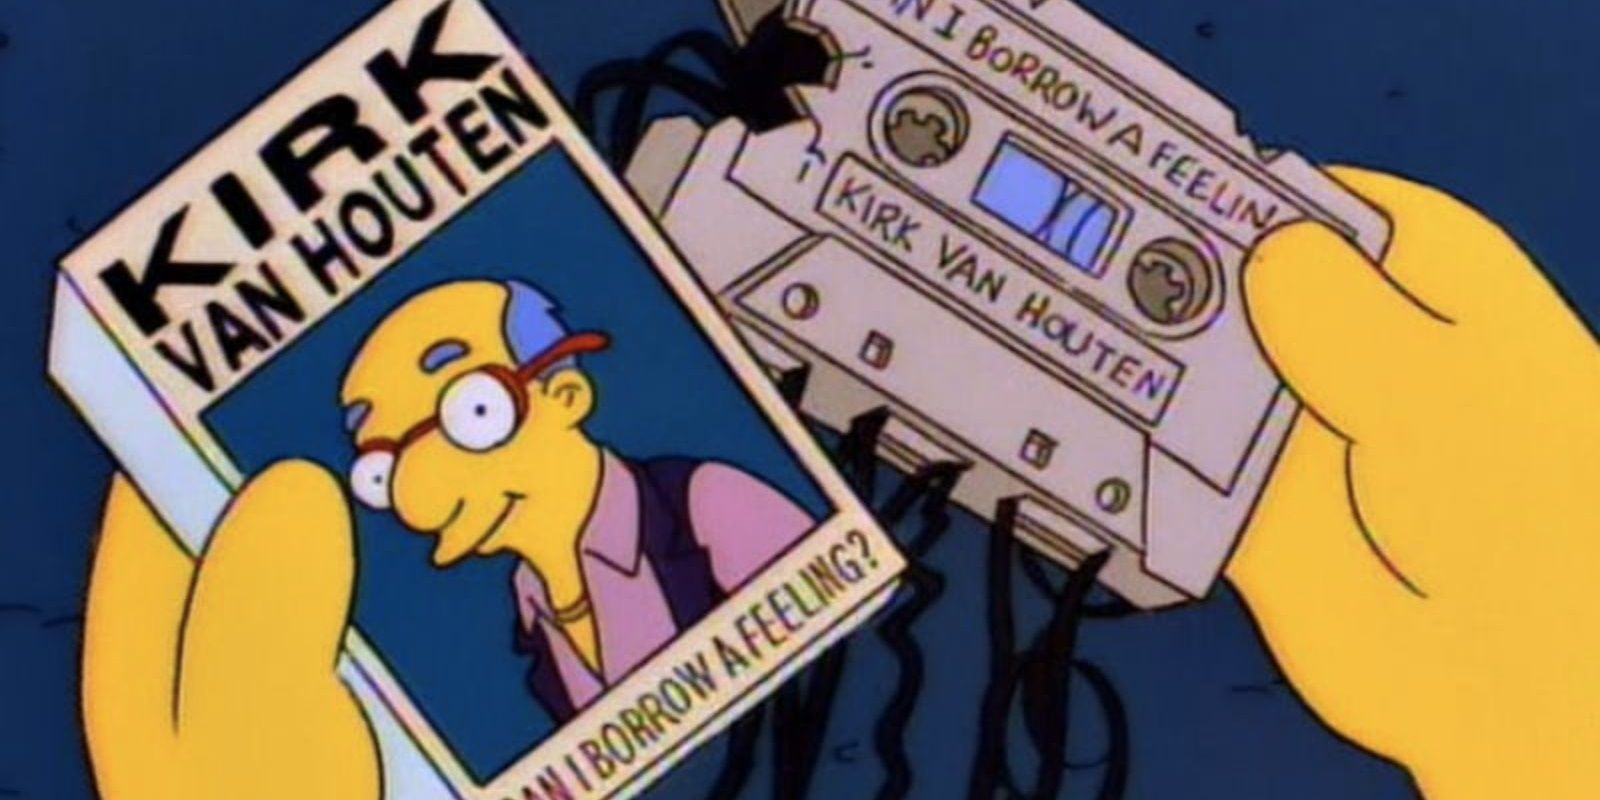 Kirk's demo tape in The Simpsons